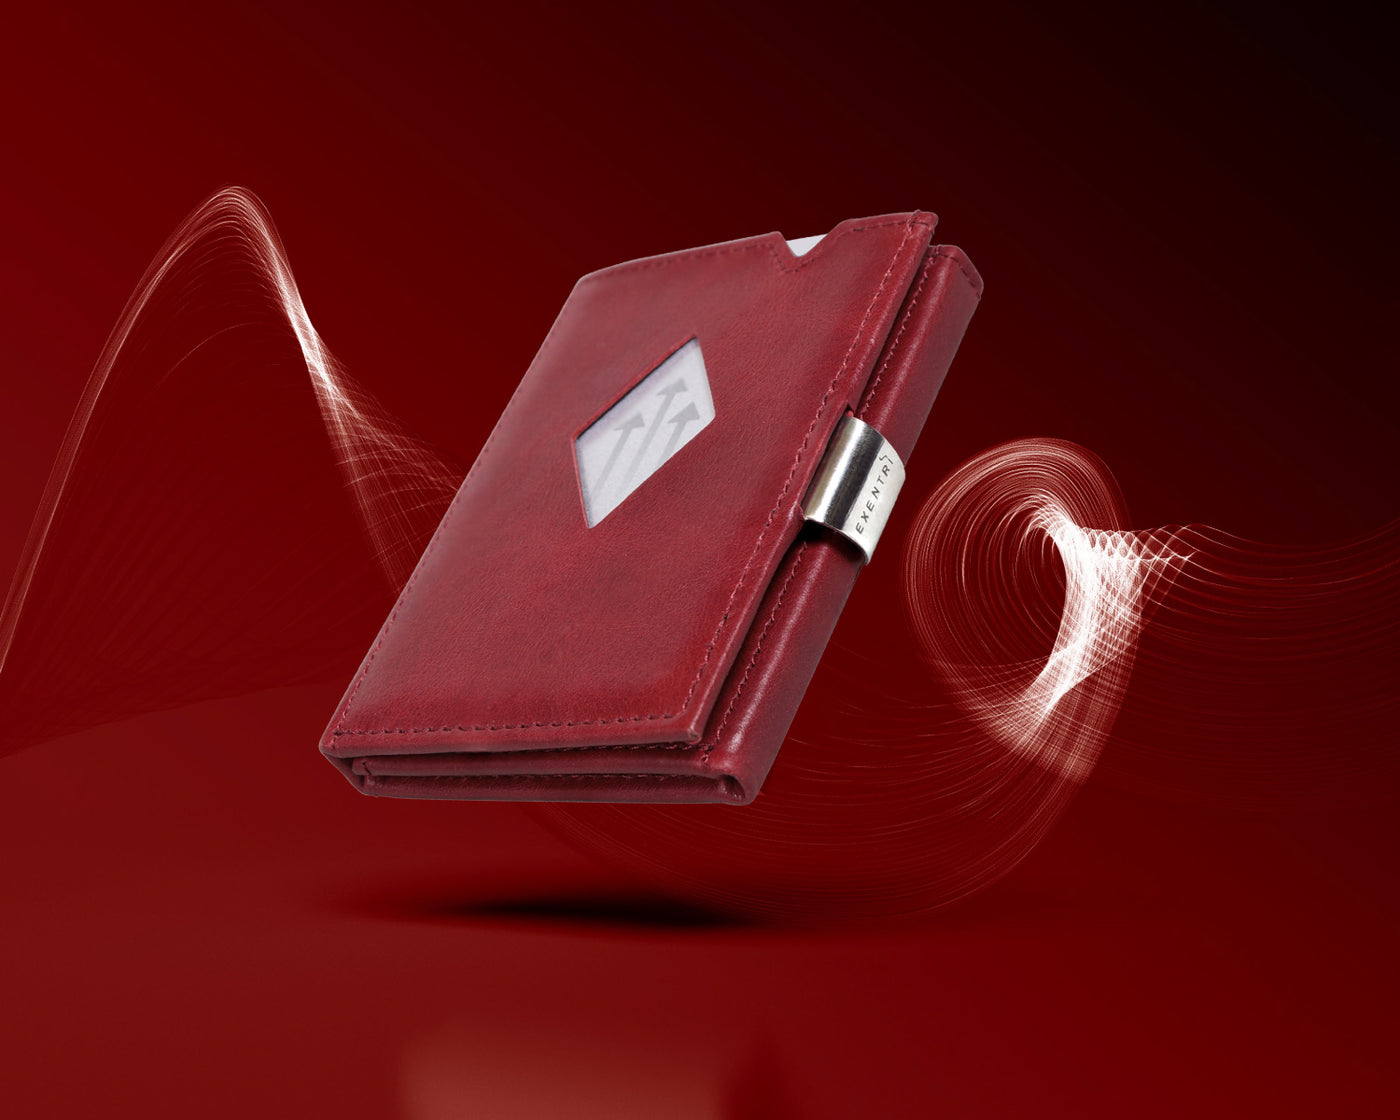 Porte-cartes portefeuille rouge avec protection RFID